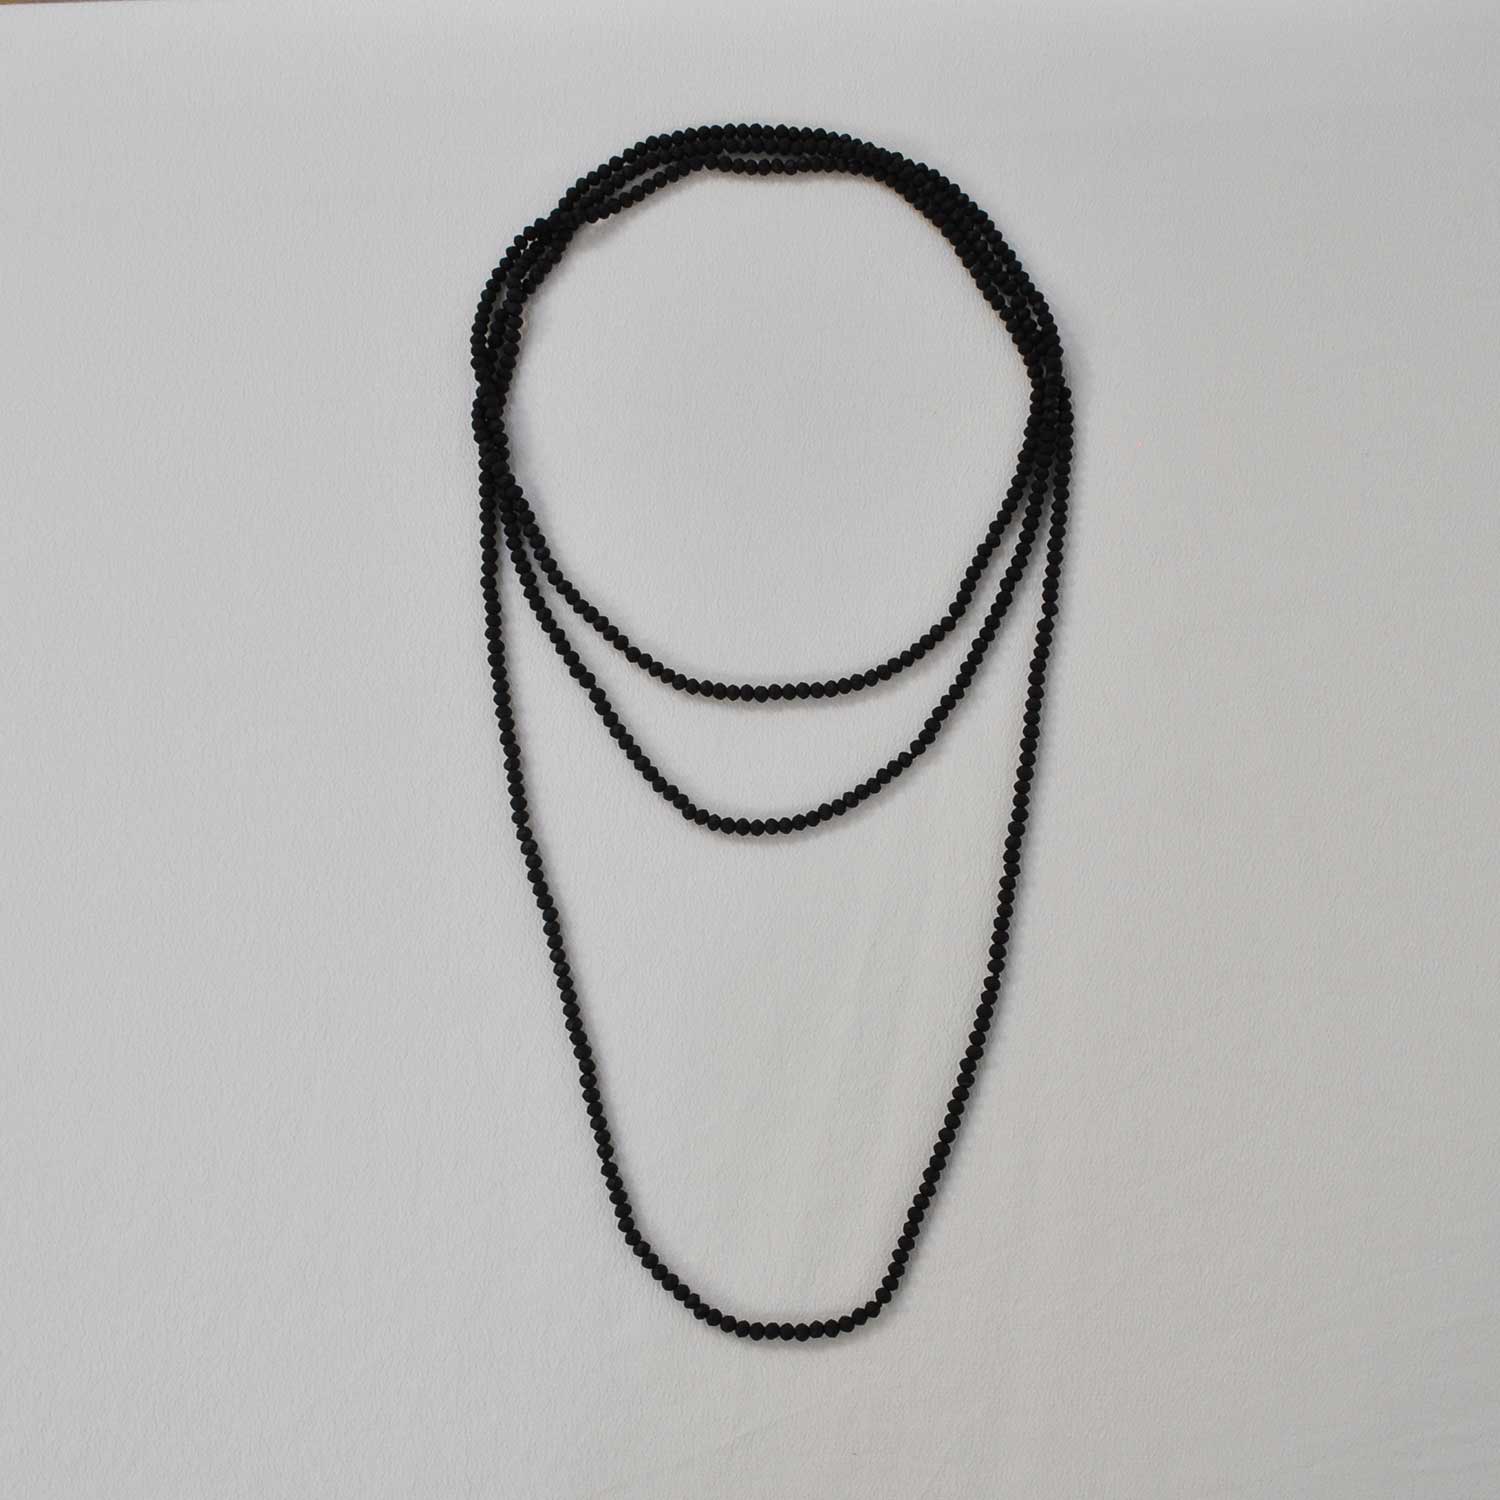 Black beads necklace